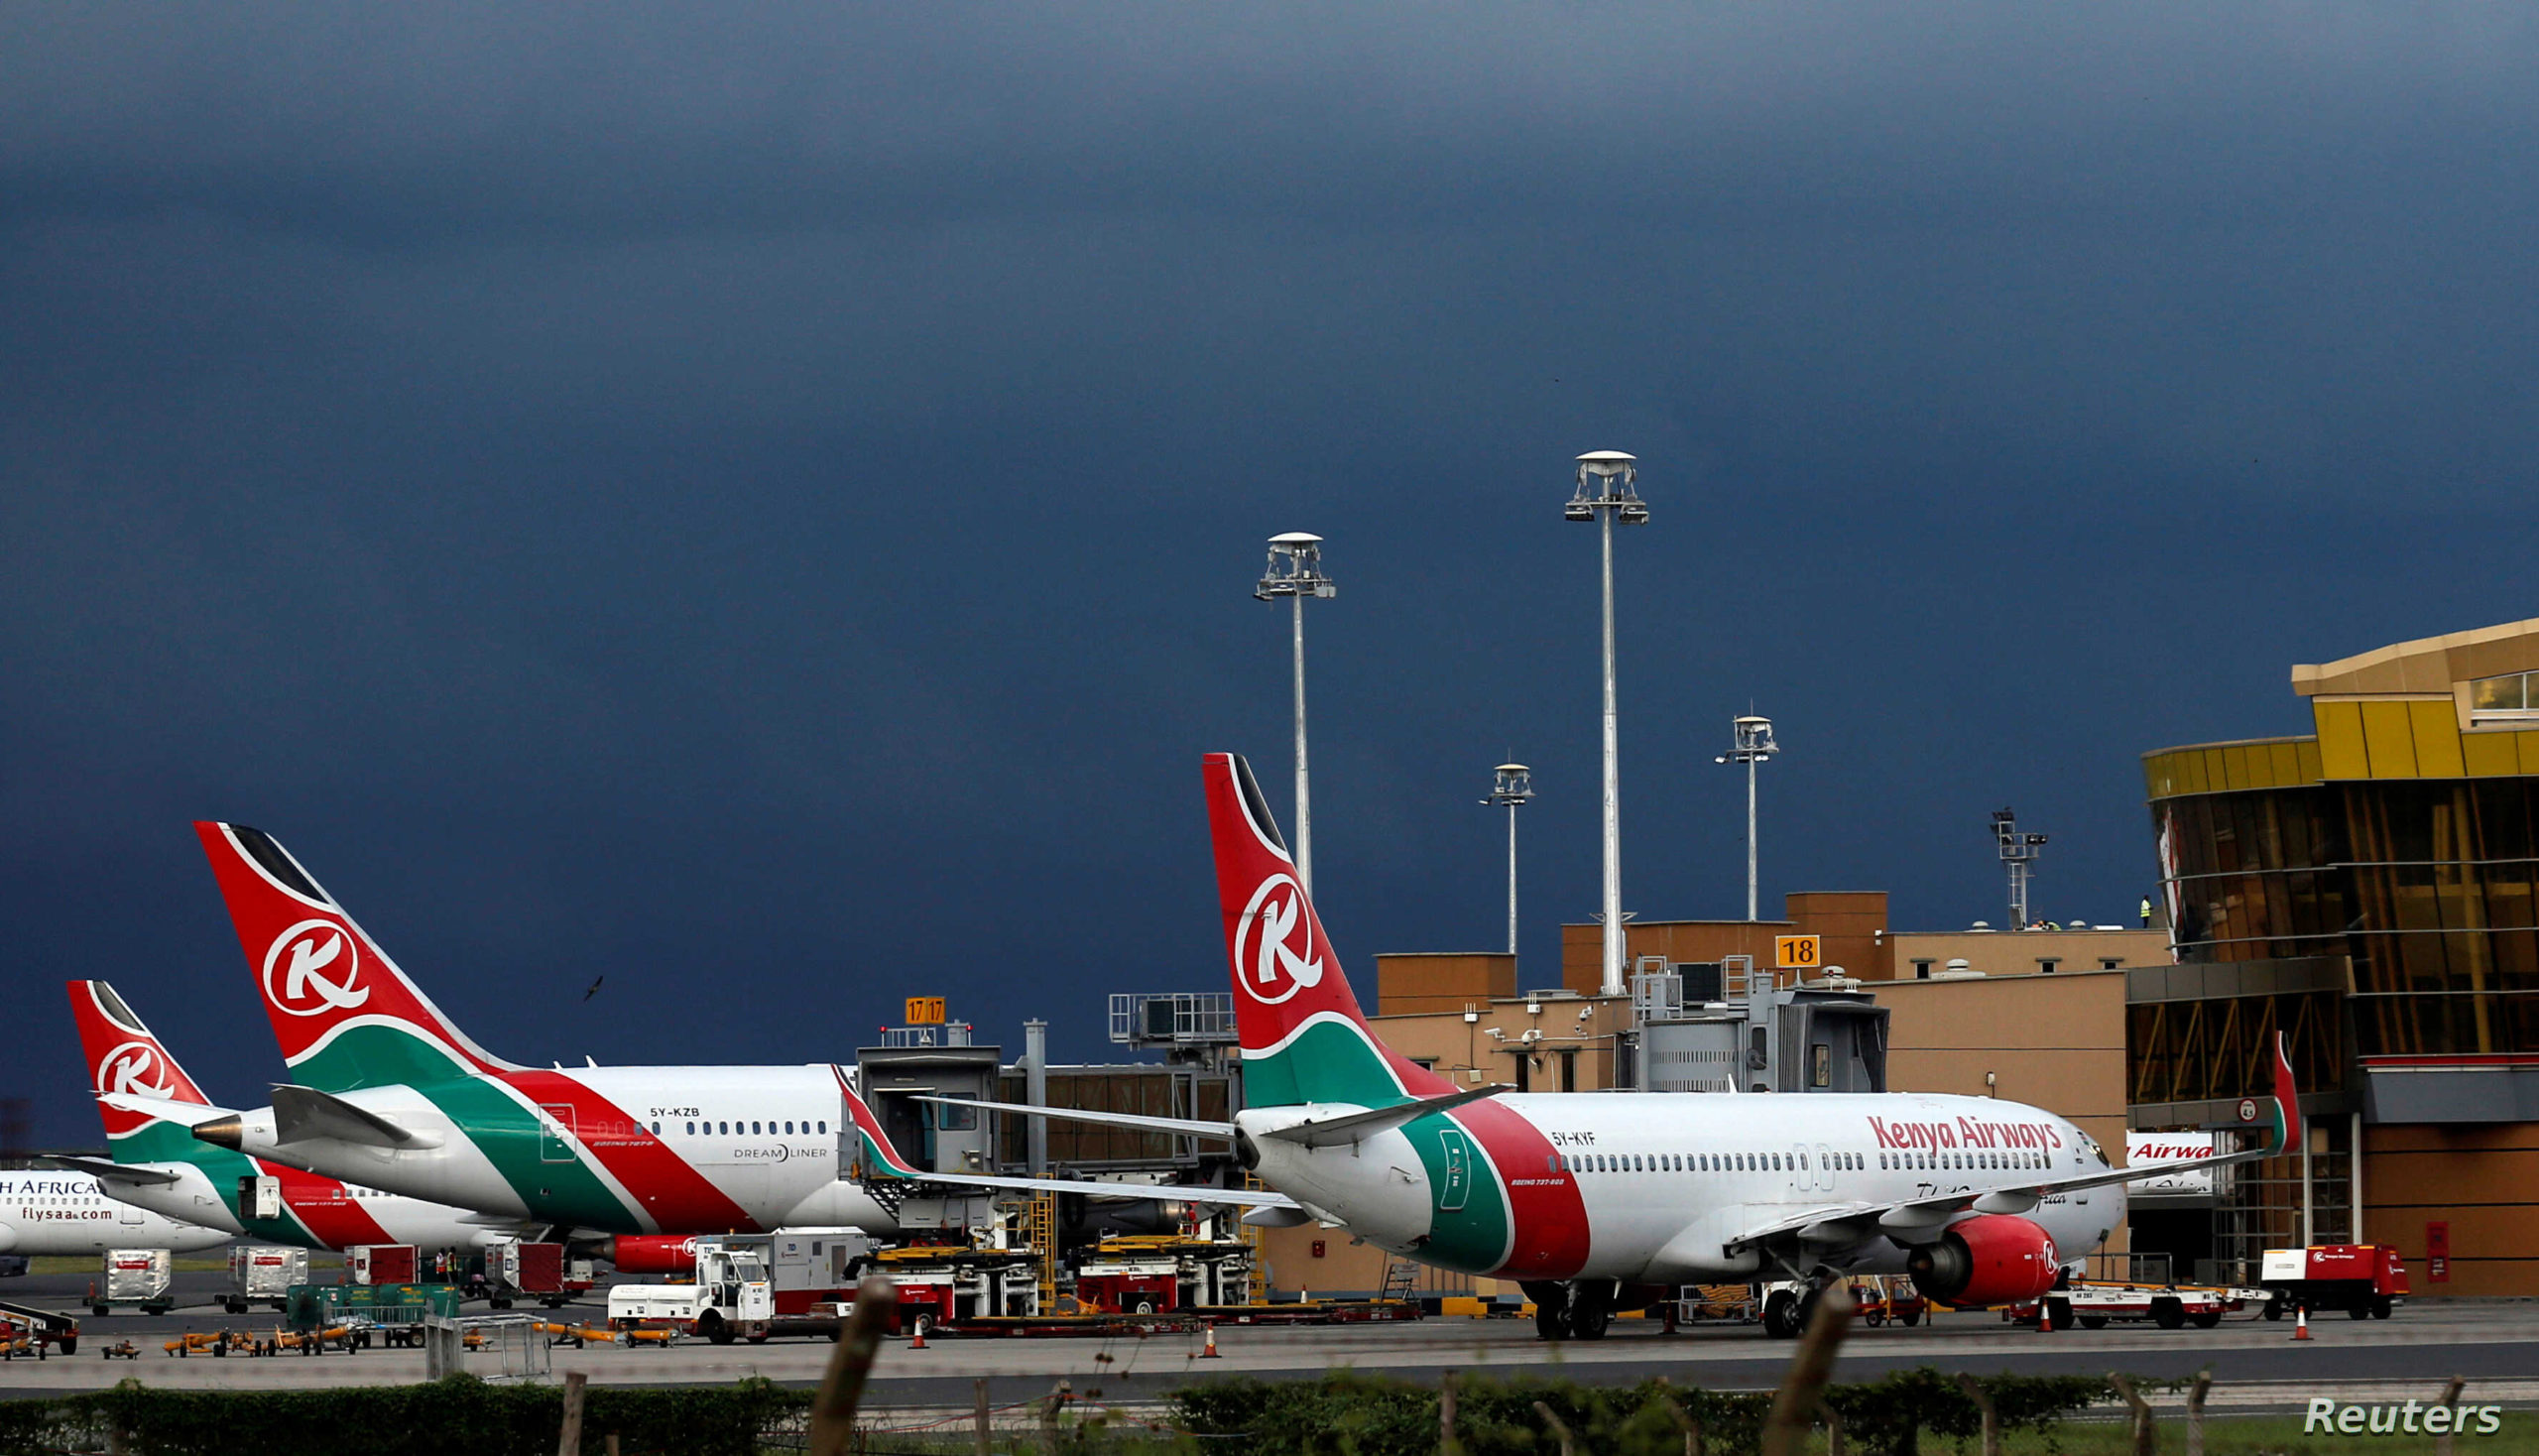 Kenya Airways wins Three Prestigious Awards at the 27th World Travel Awards